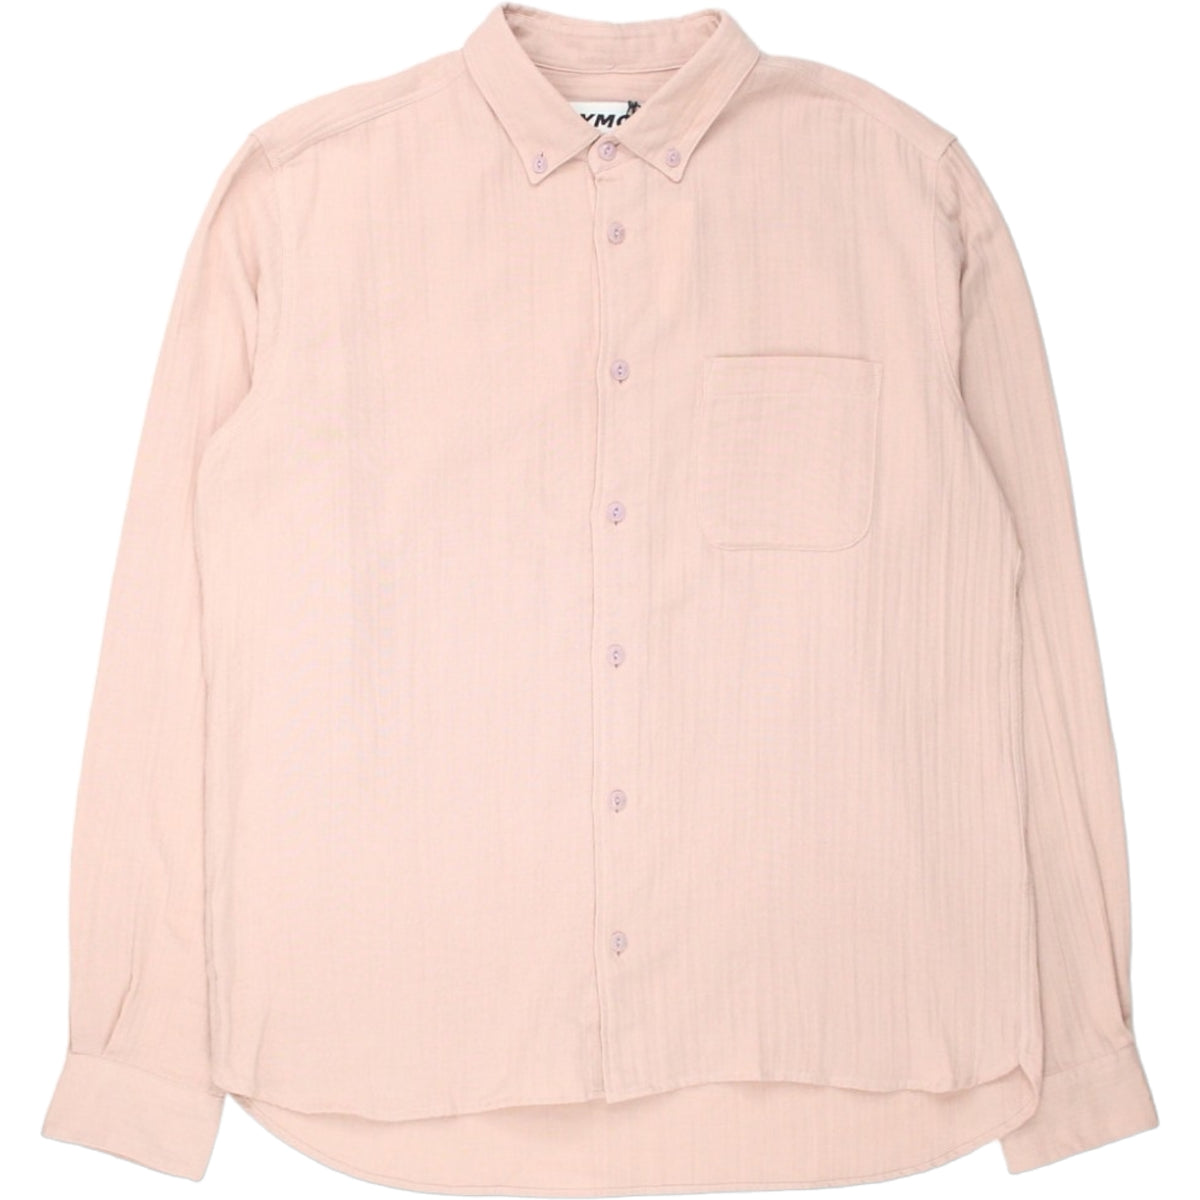 YMC Pink Crinkle Cotton Shirt